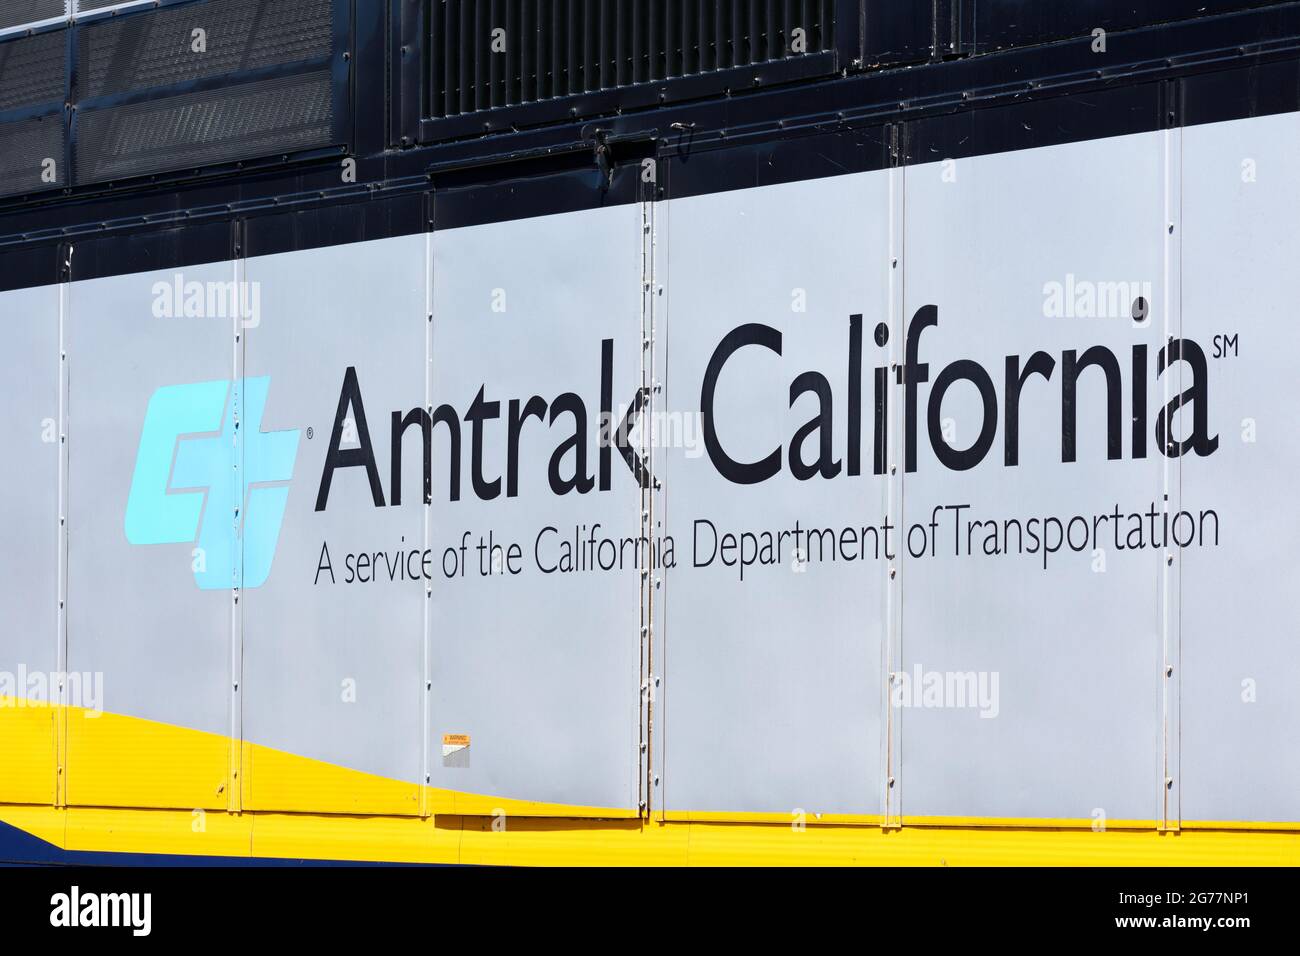 Amtrak California a service of the California Department of Transportation sign on diesel passenger locomotive. - San Jose, California, USA - 2021 Stock Photo